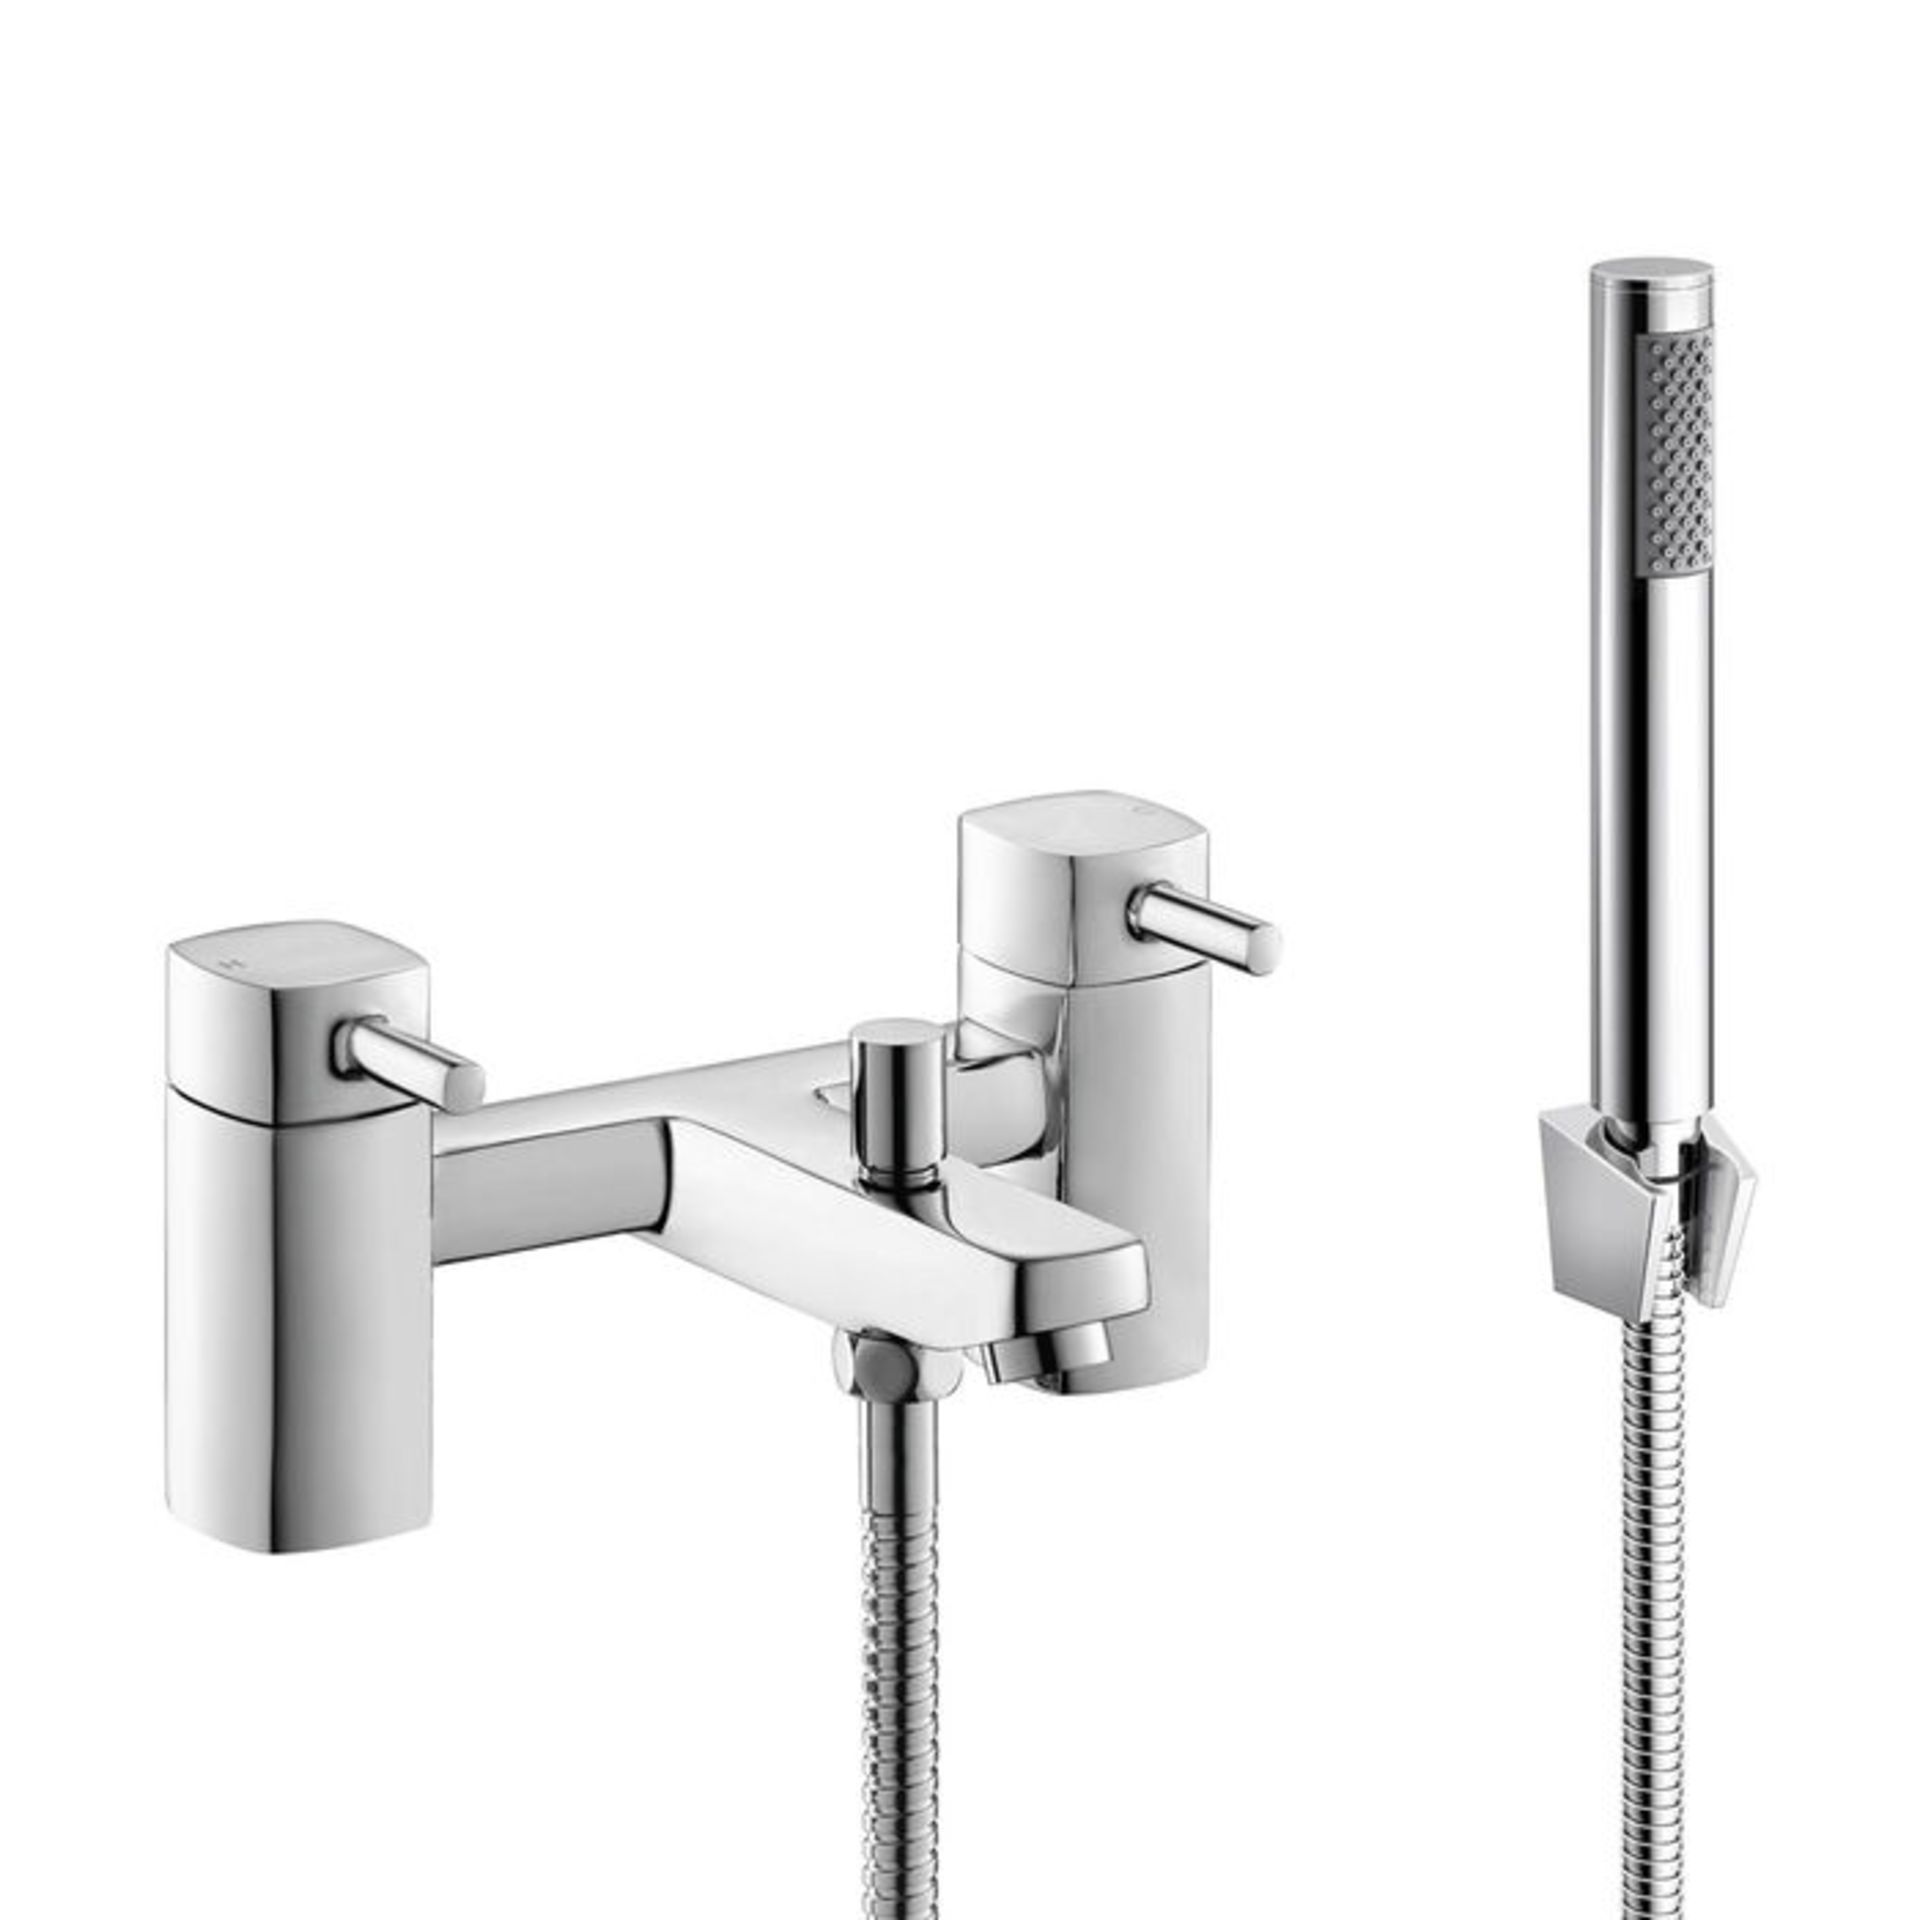 (CC102) Avon Bath Mixer Tap & Handheld Shower Head. Chrome Plated Solid Brass 1/4 turn solid b...